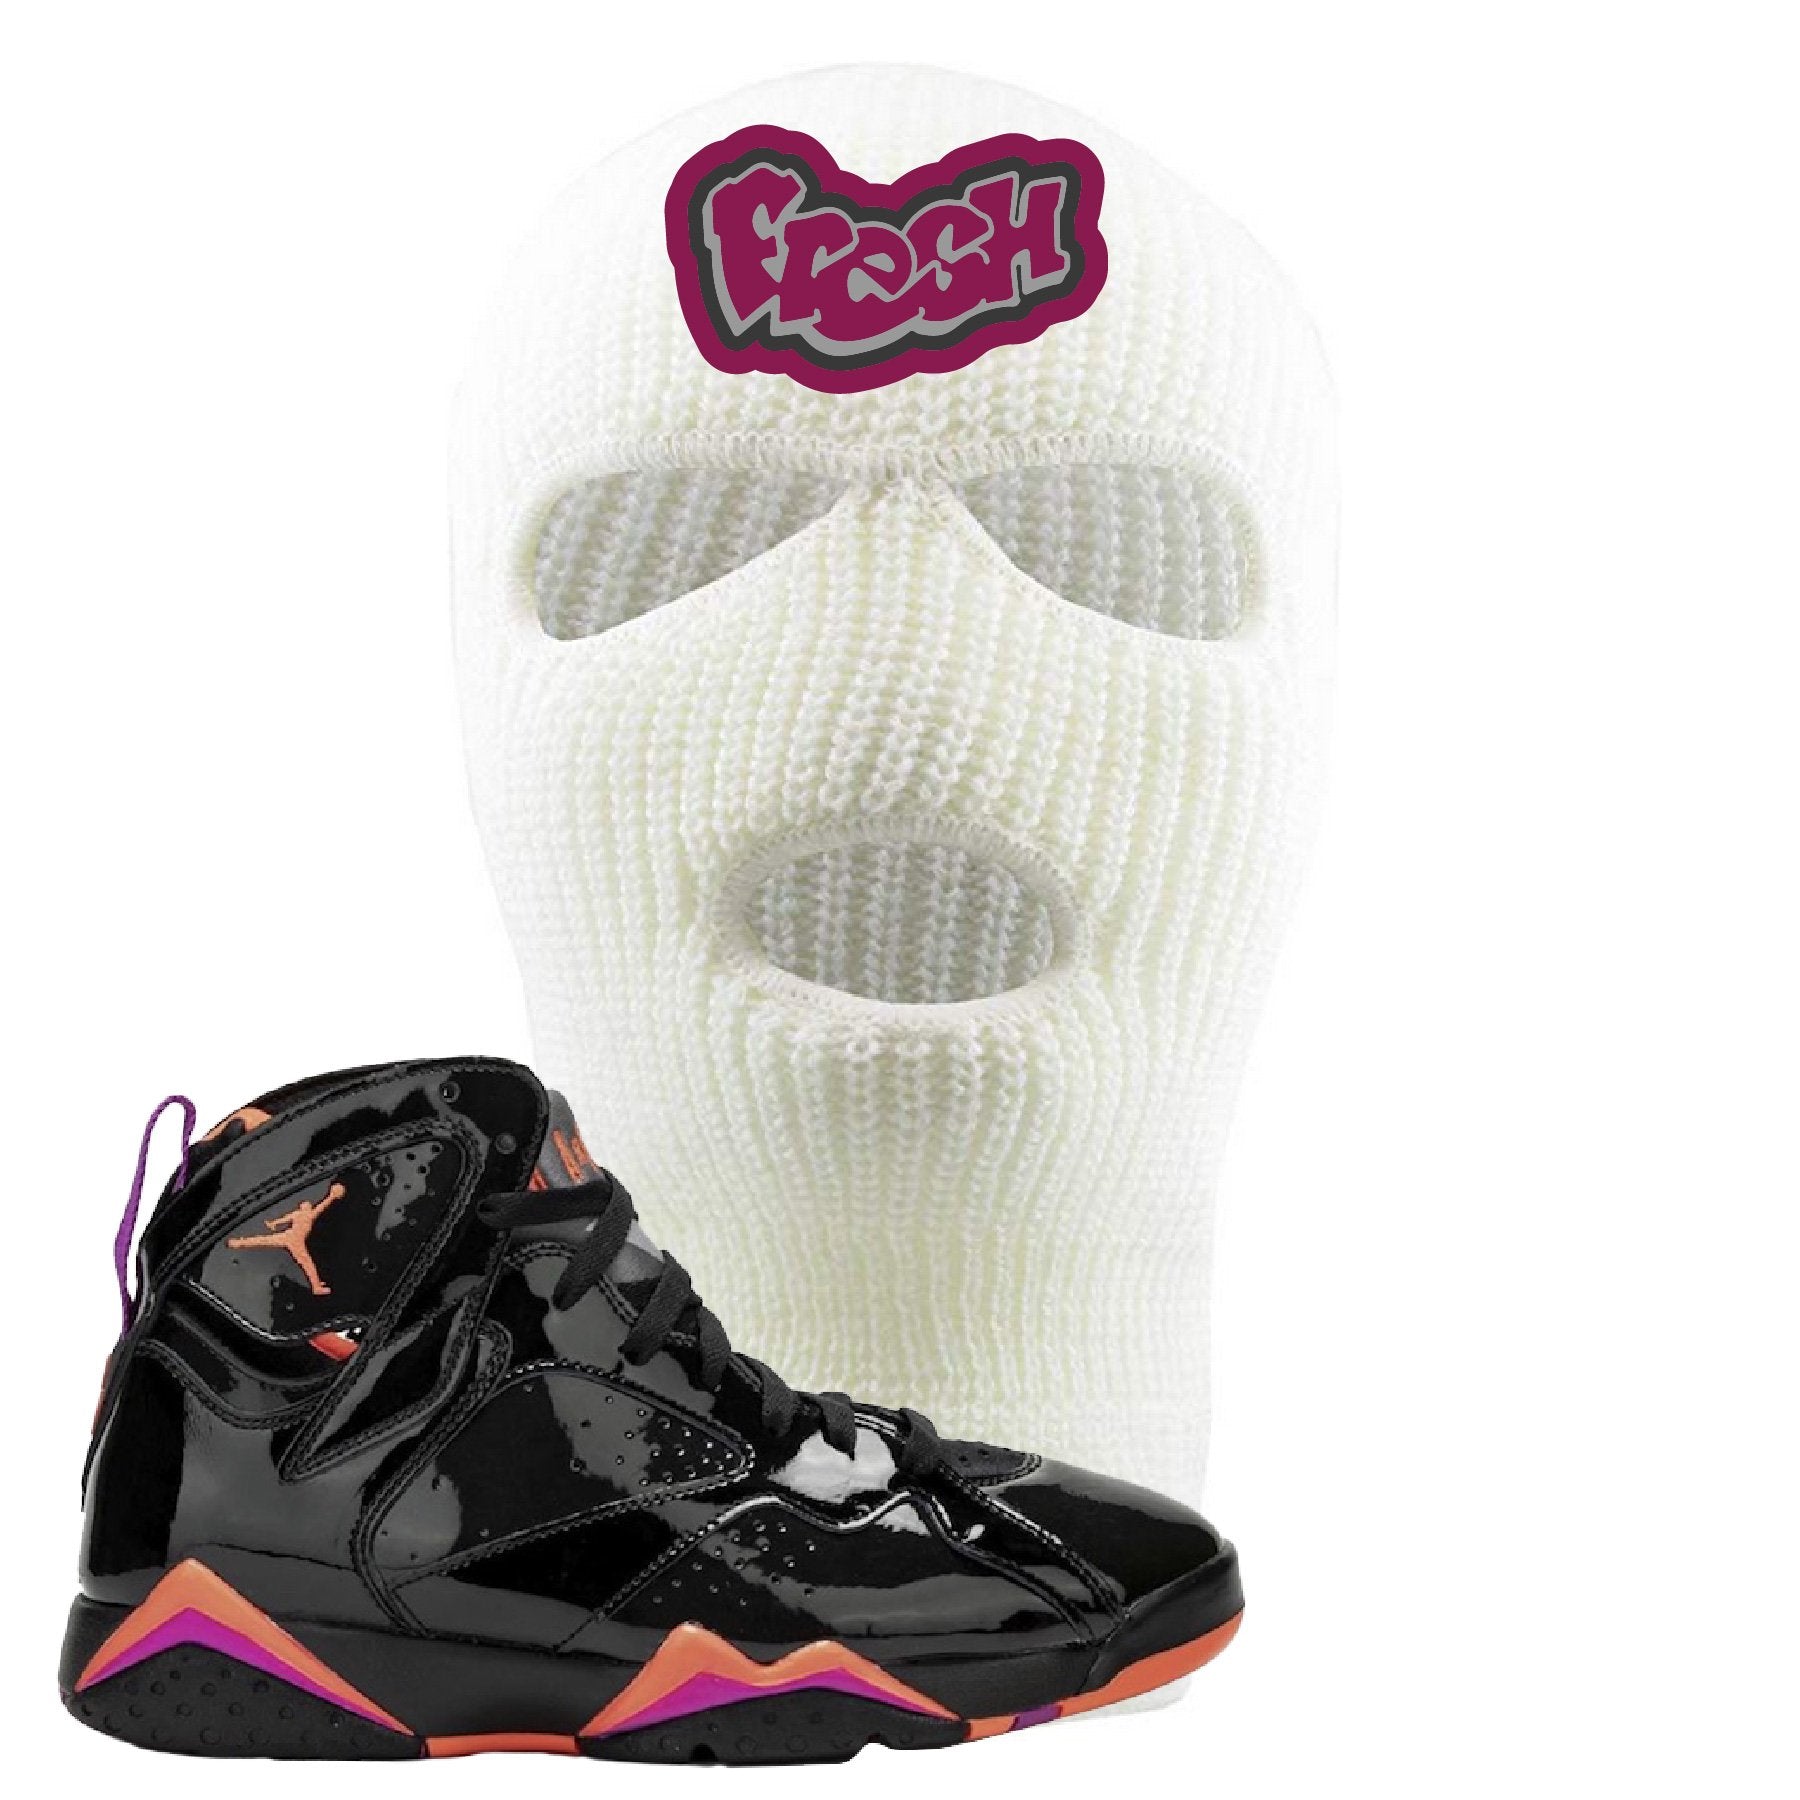 Jordan 7 WMNS Black Patent Leather Fresh White Sneaker Hook Up Ski Mask